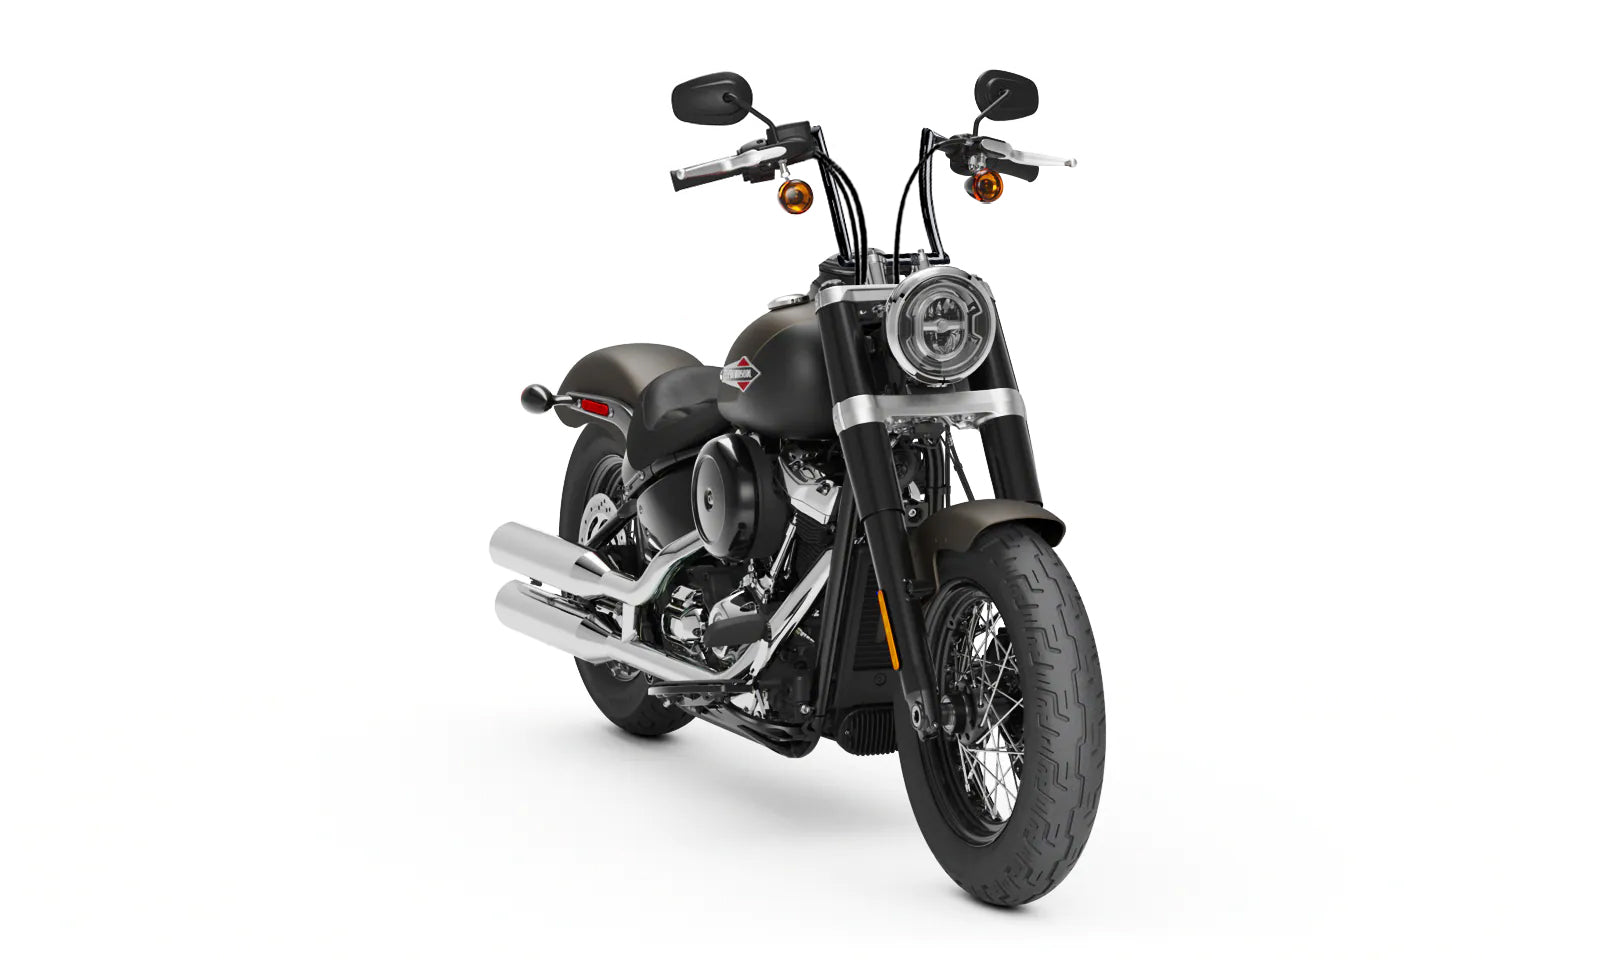 Viking Iron Born 9" Handlebar For Harley Softail Slim FLS Gloss Black Bag on Bike View @expand